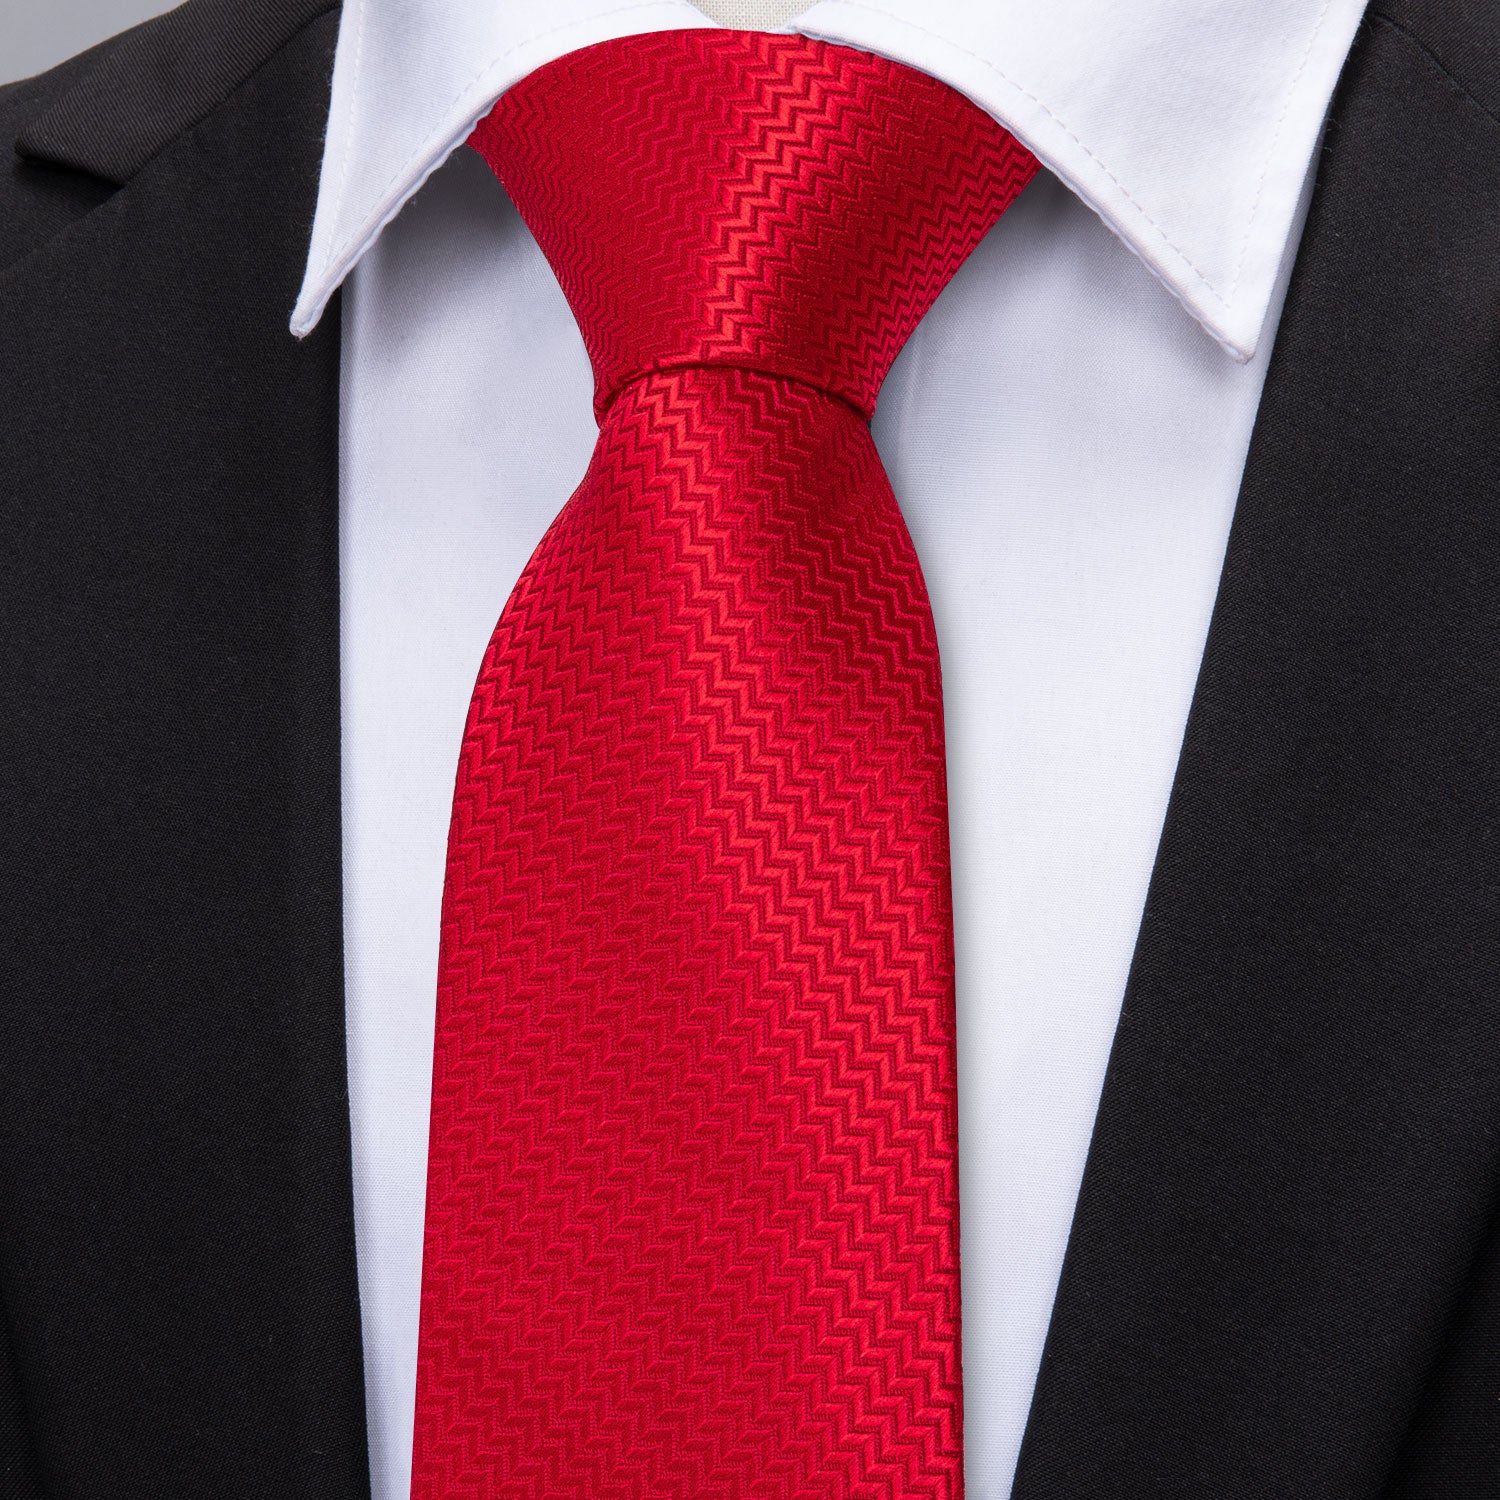 Red Novelty Silk Men's Tie Pocket Square Cufflinks Set